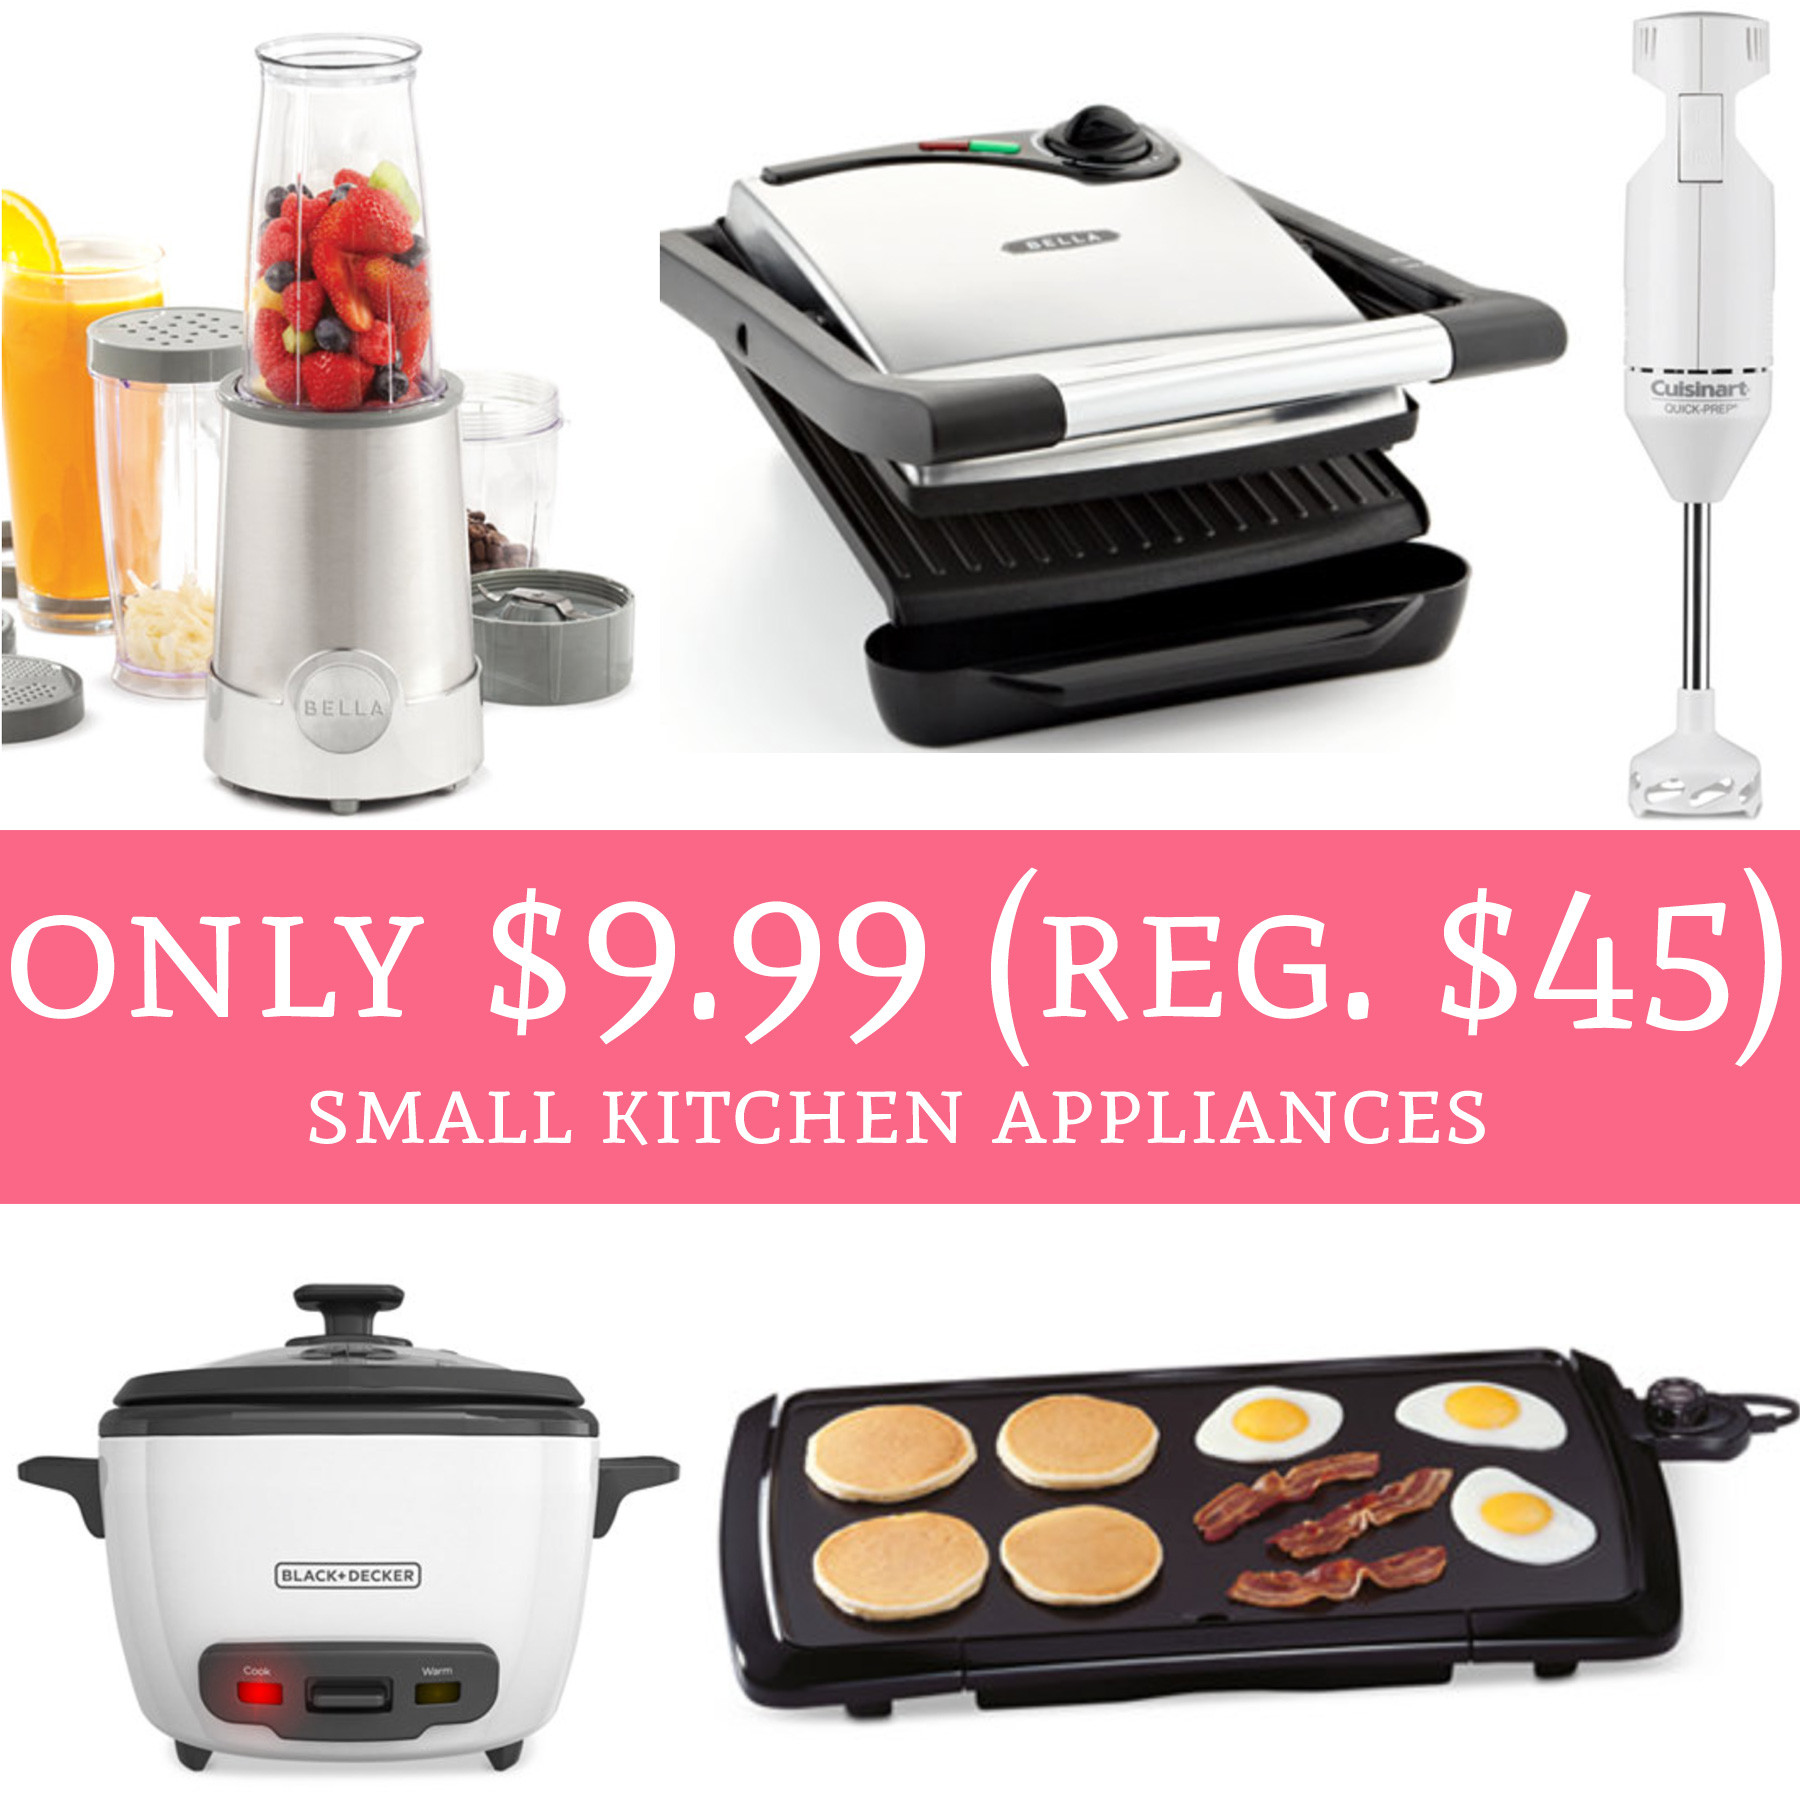 Kitchen Small Appliances
 HOT ly $9 99 Regular $45 Small Kitchen Appliances